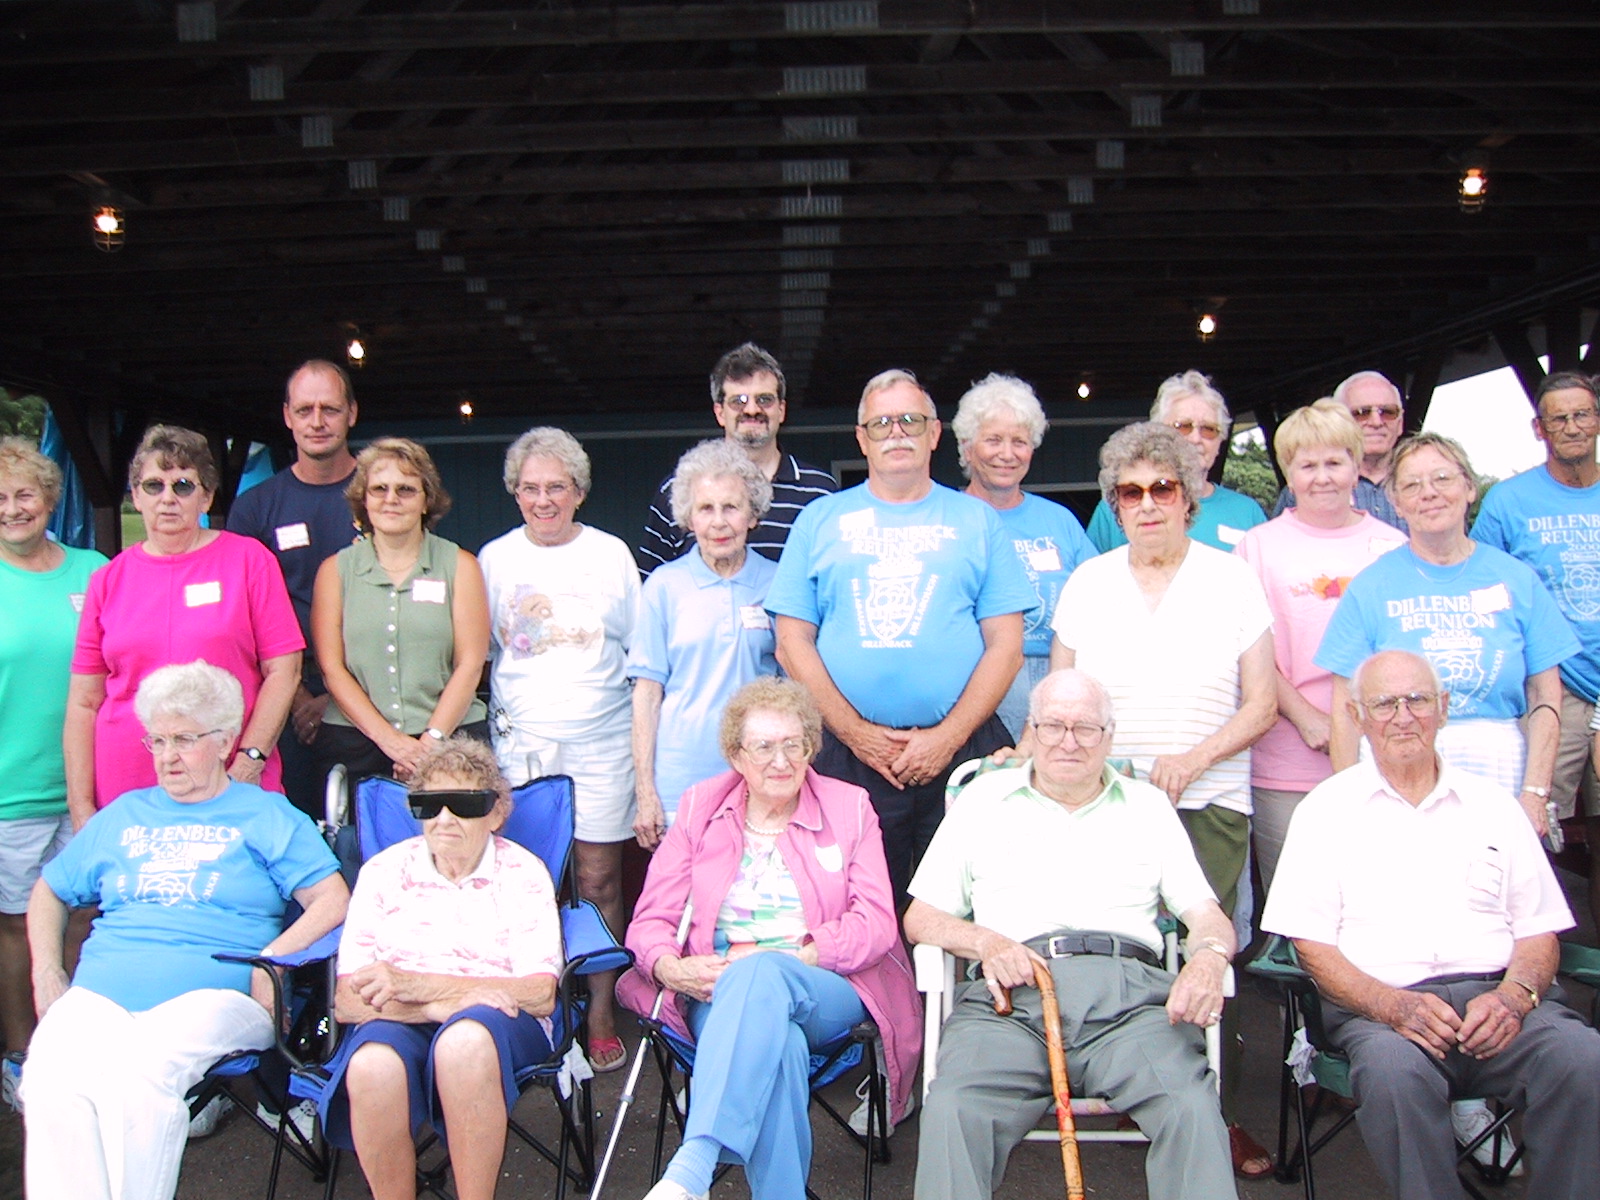 The 101st Dillenbeck Family Reunion (Center)